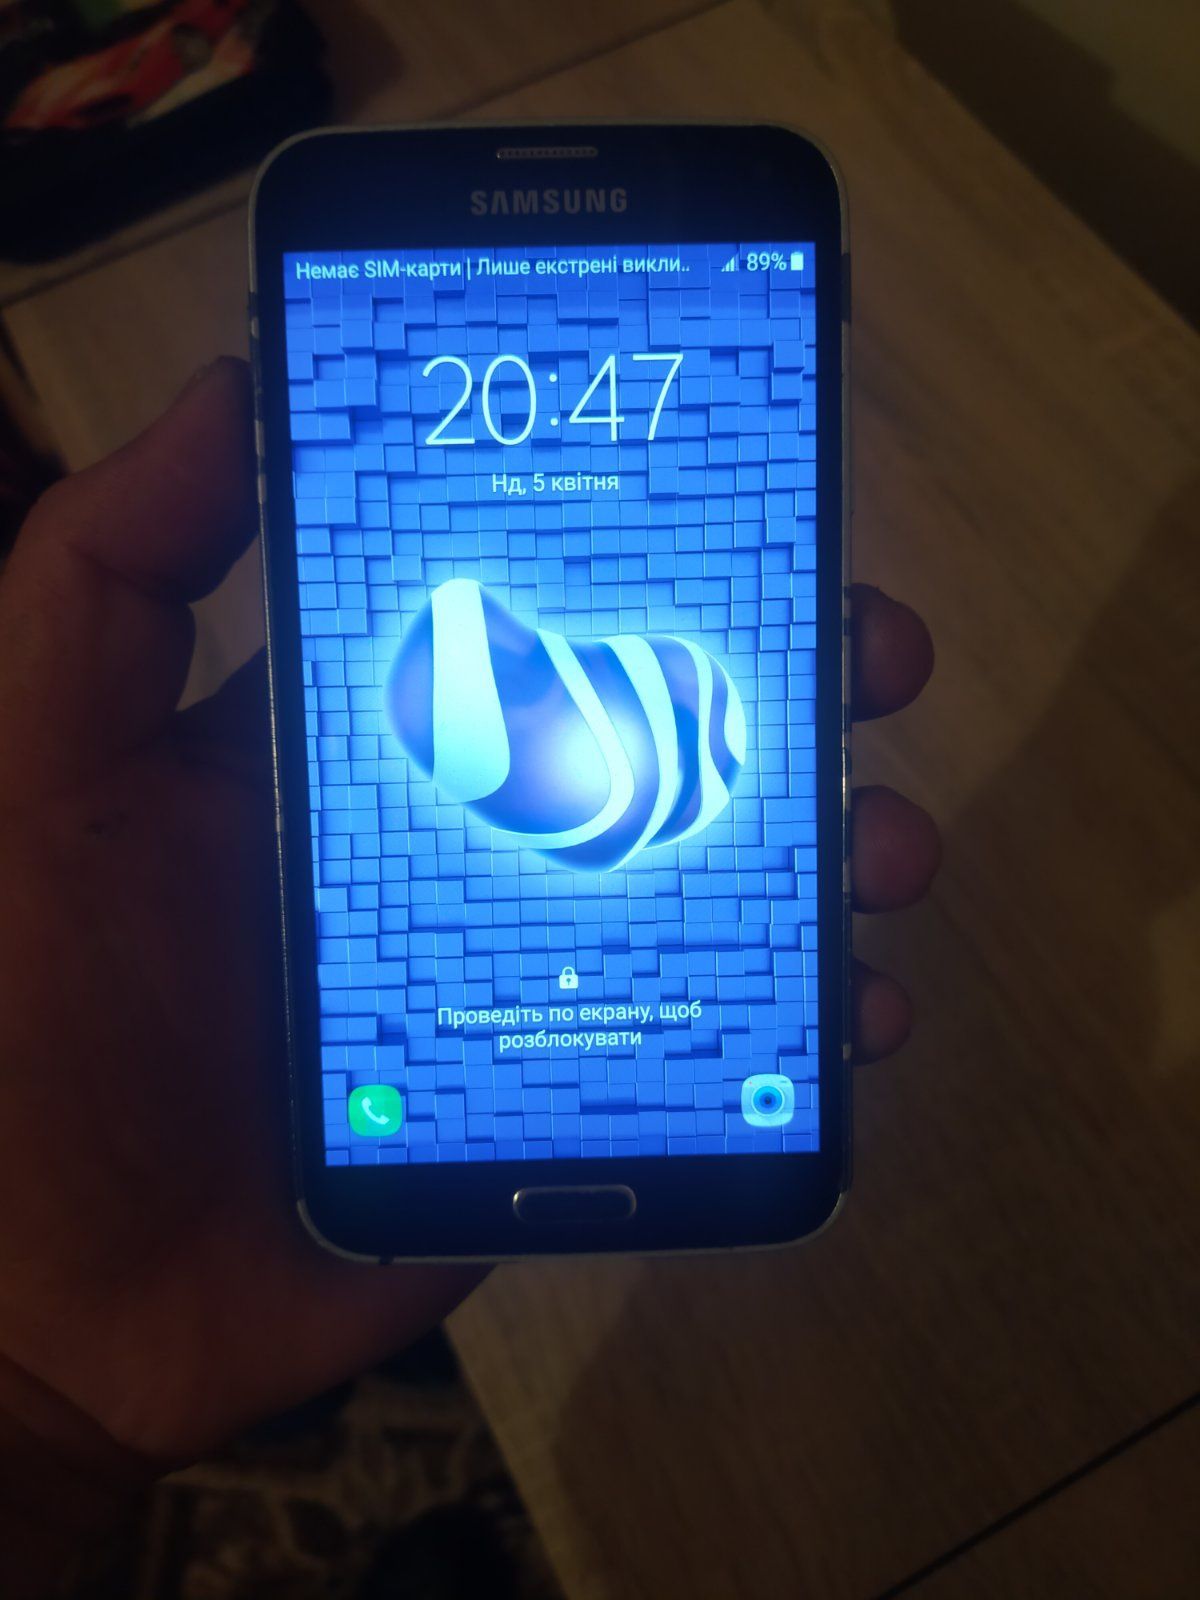 Смартфон Samsung galaxy S5 neo 2/16 gb.